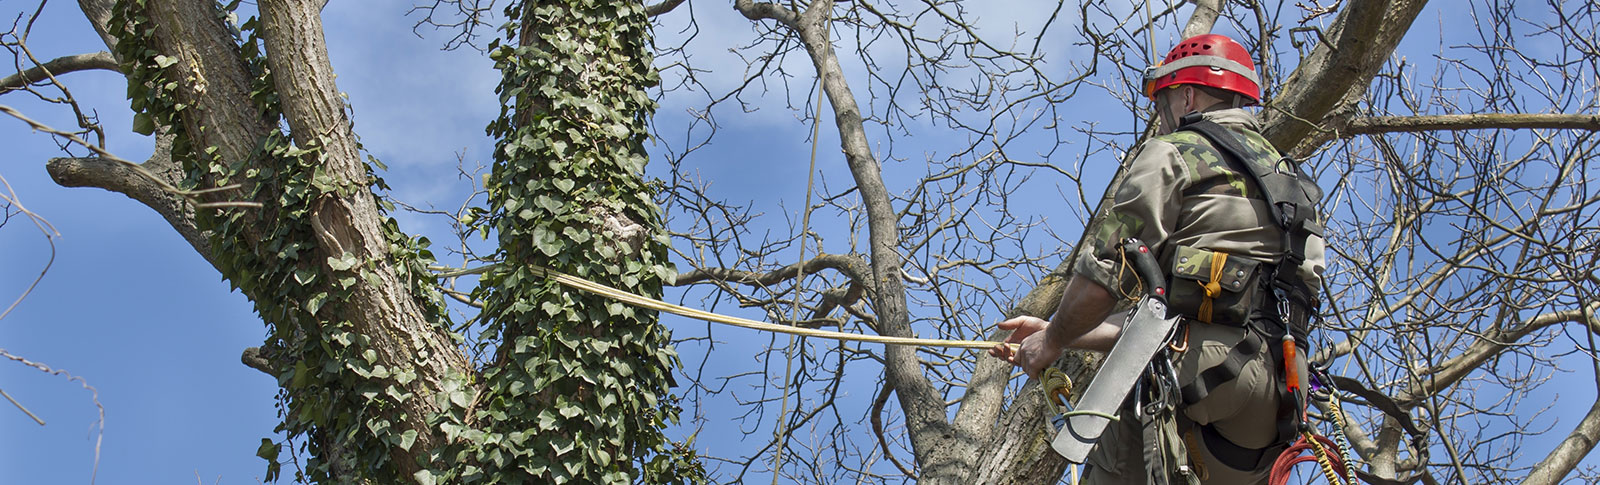 Cobham Tree Surgeon Pruning Tree